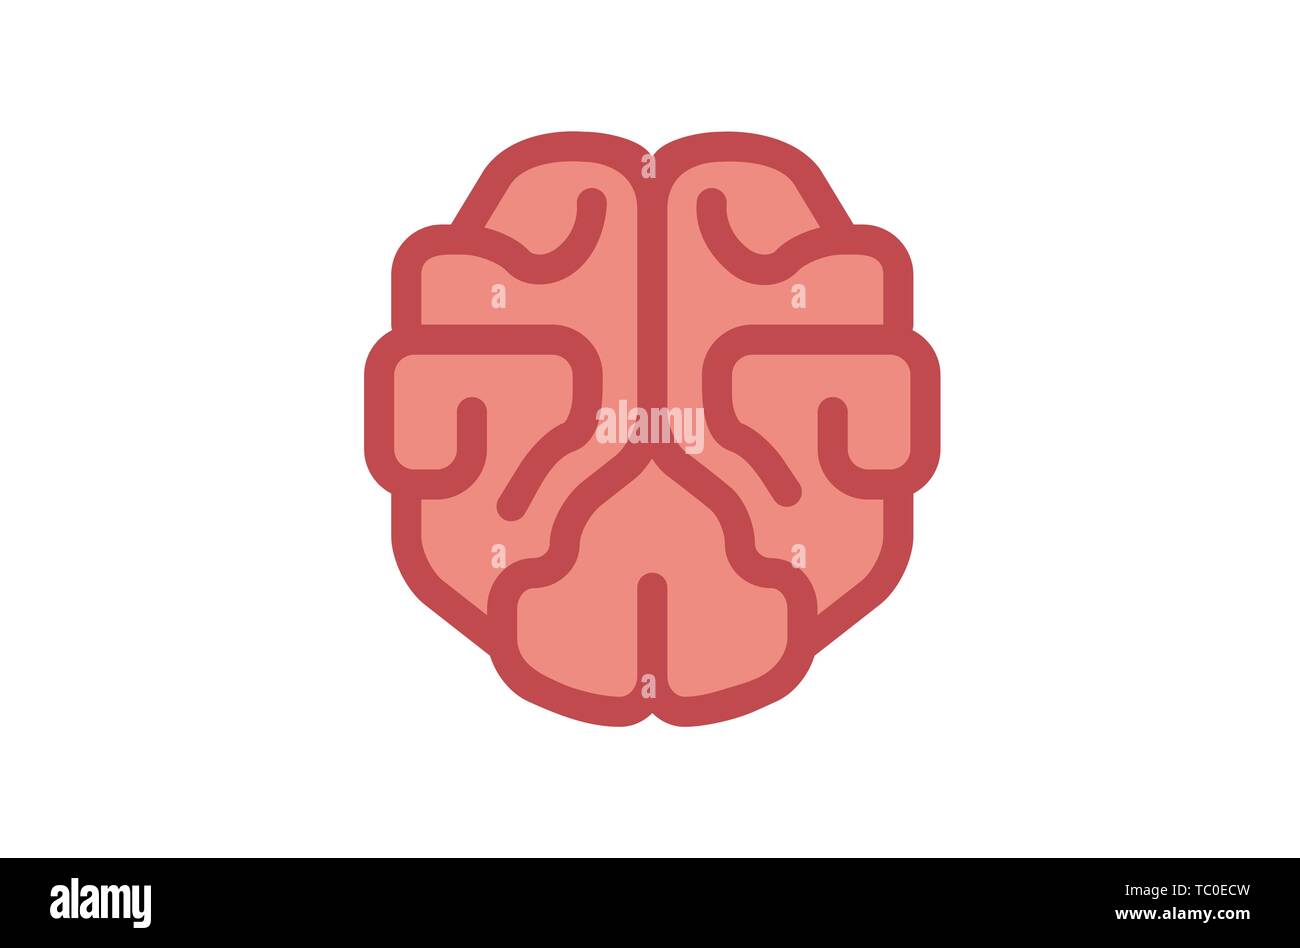 Creative Abstract Brain Logo Design Illustration Stock Vector